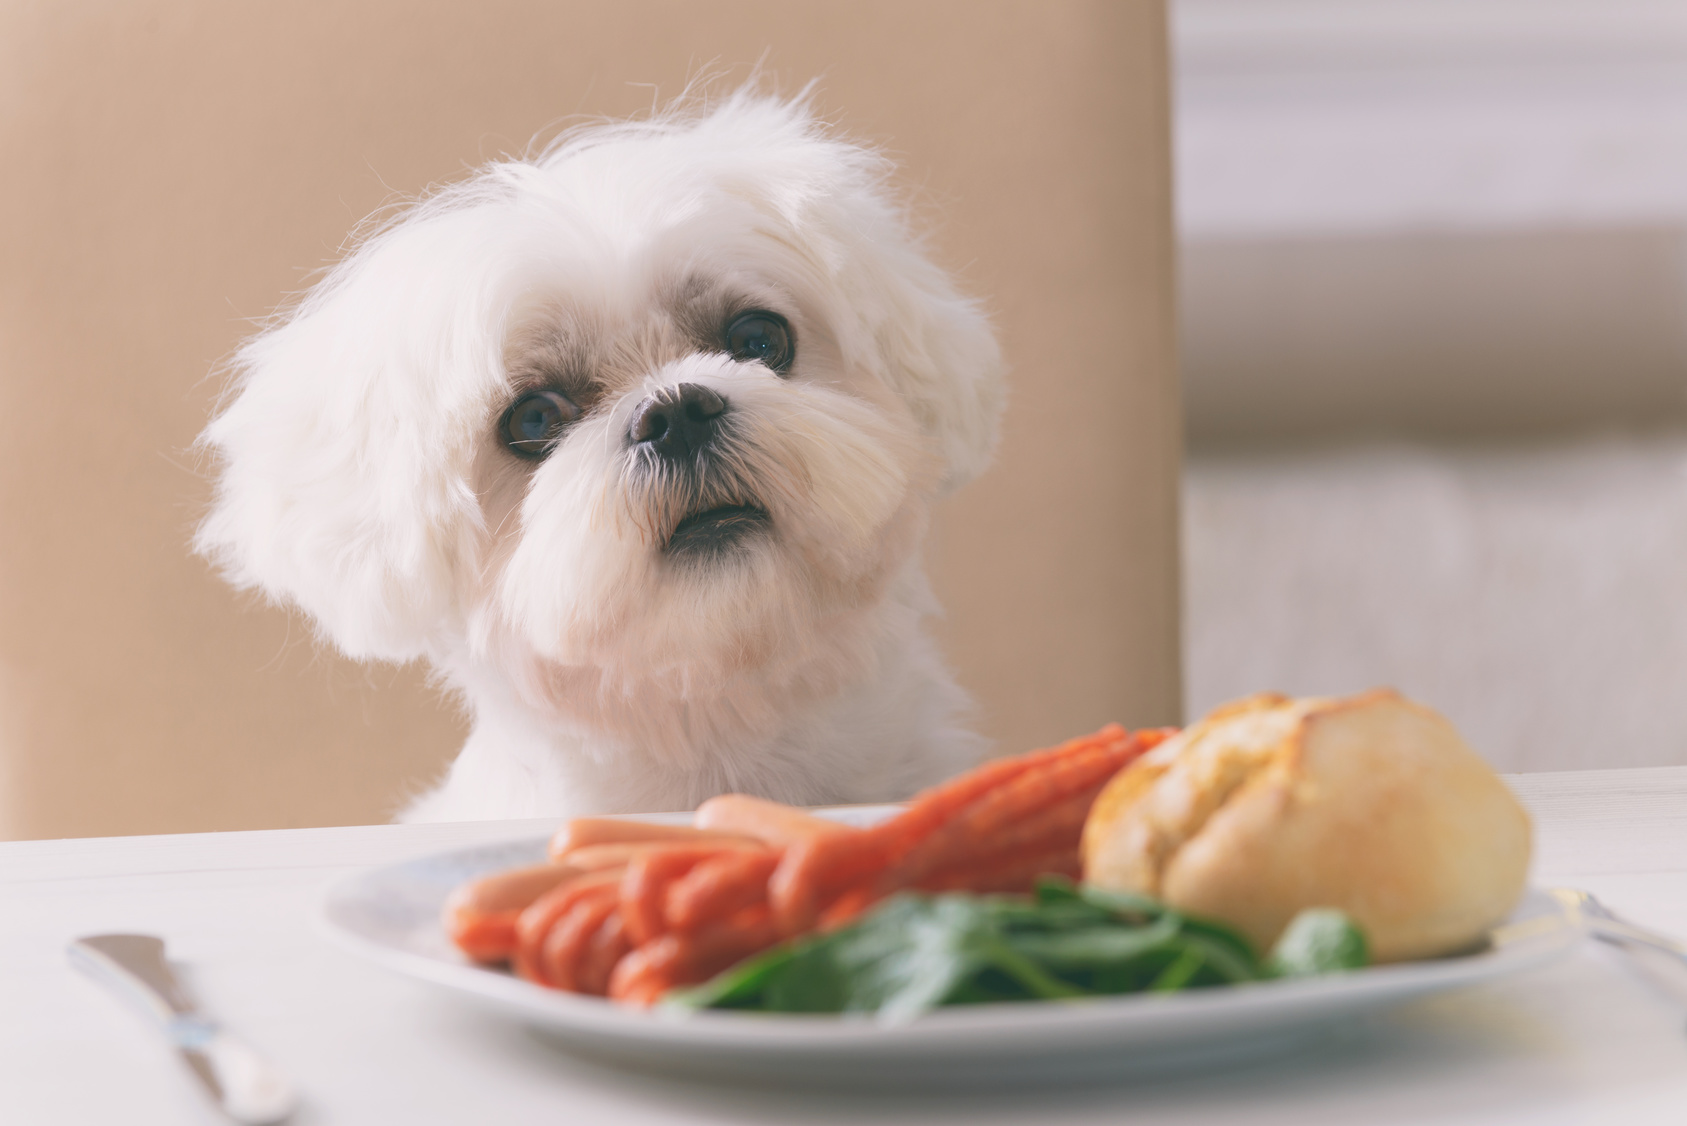 Espectador rumor Tumor maligno ⛔ 10 Alimentos prohibidos para perros ⛔ | Evita la intoxicación